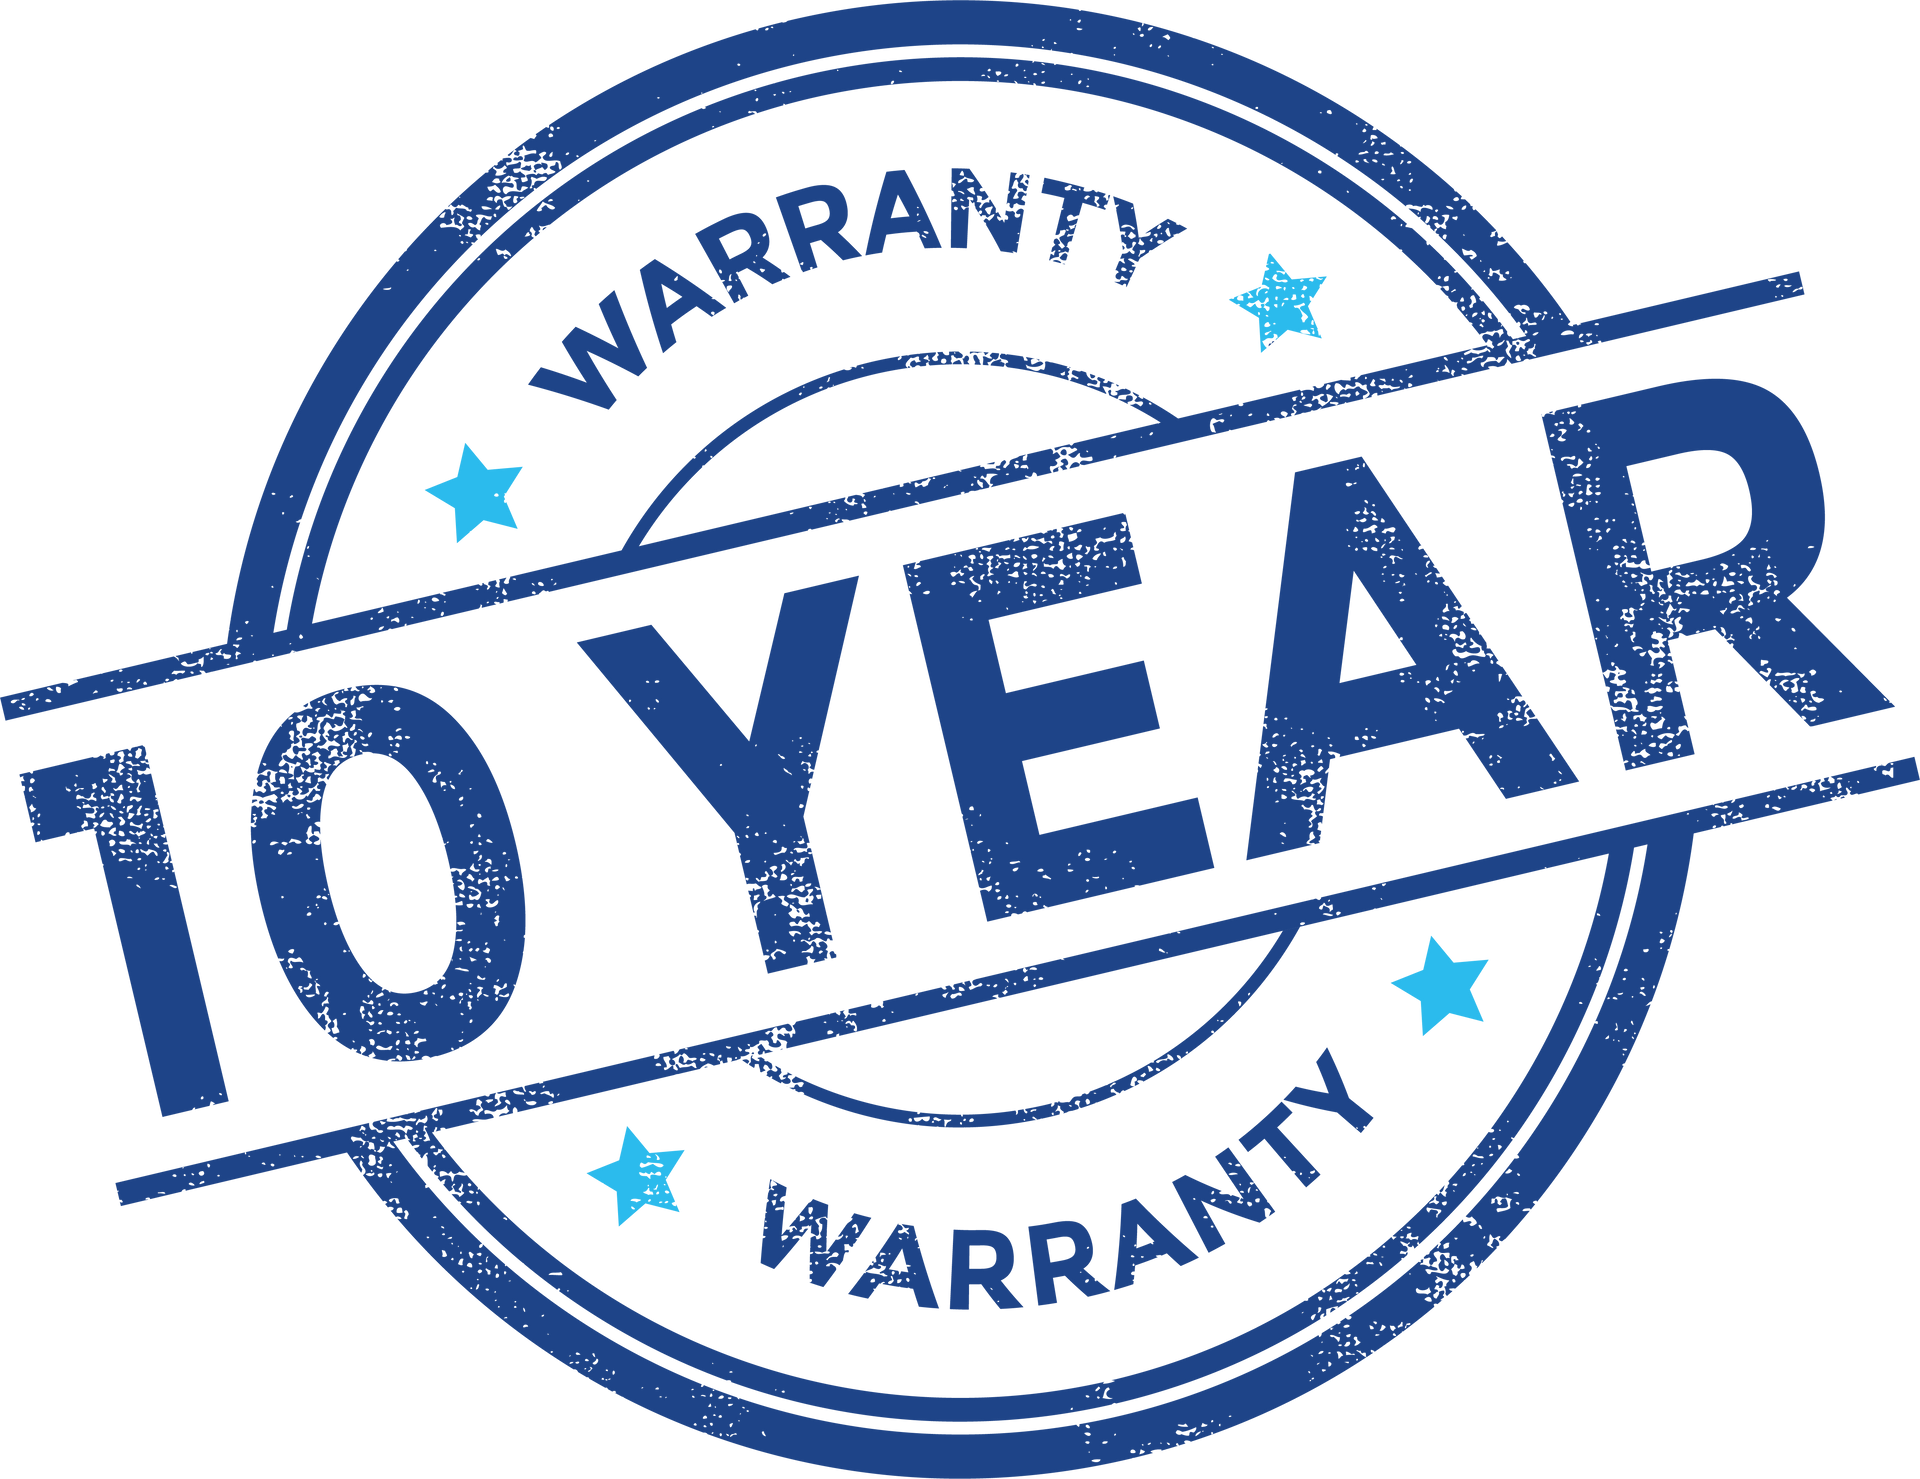 10 year warranty icon